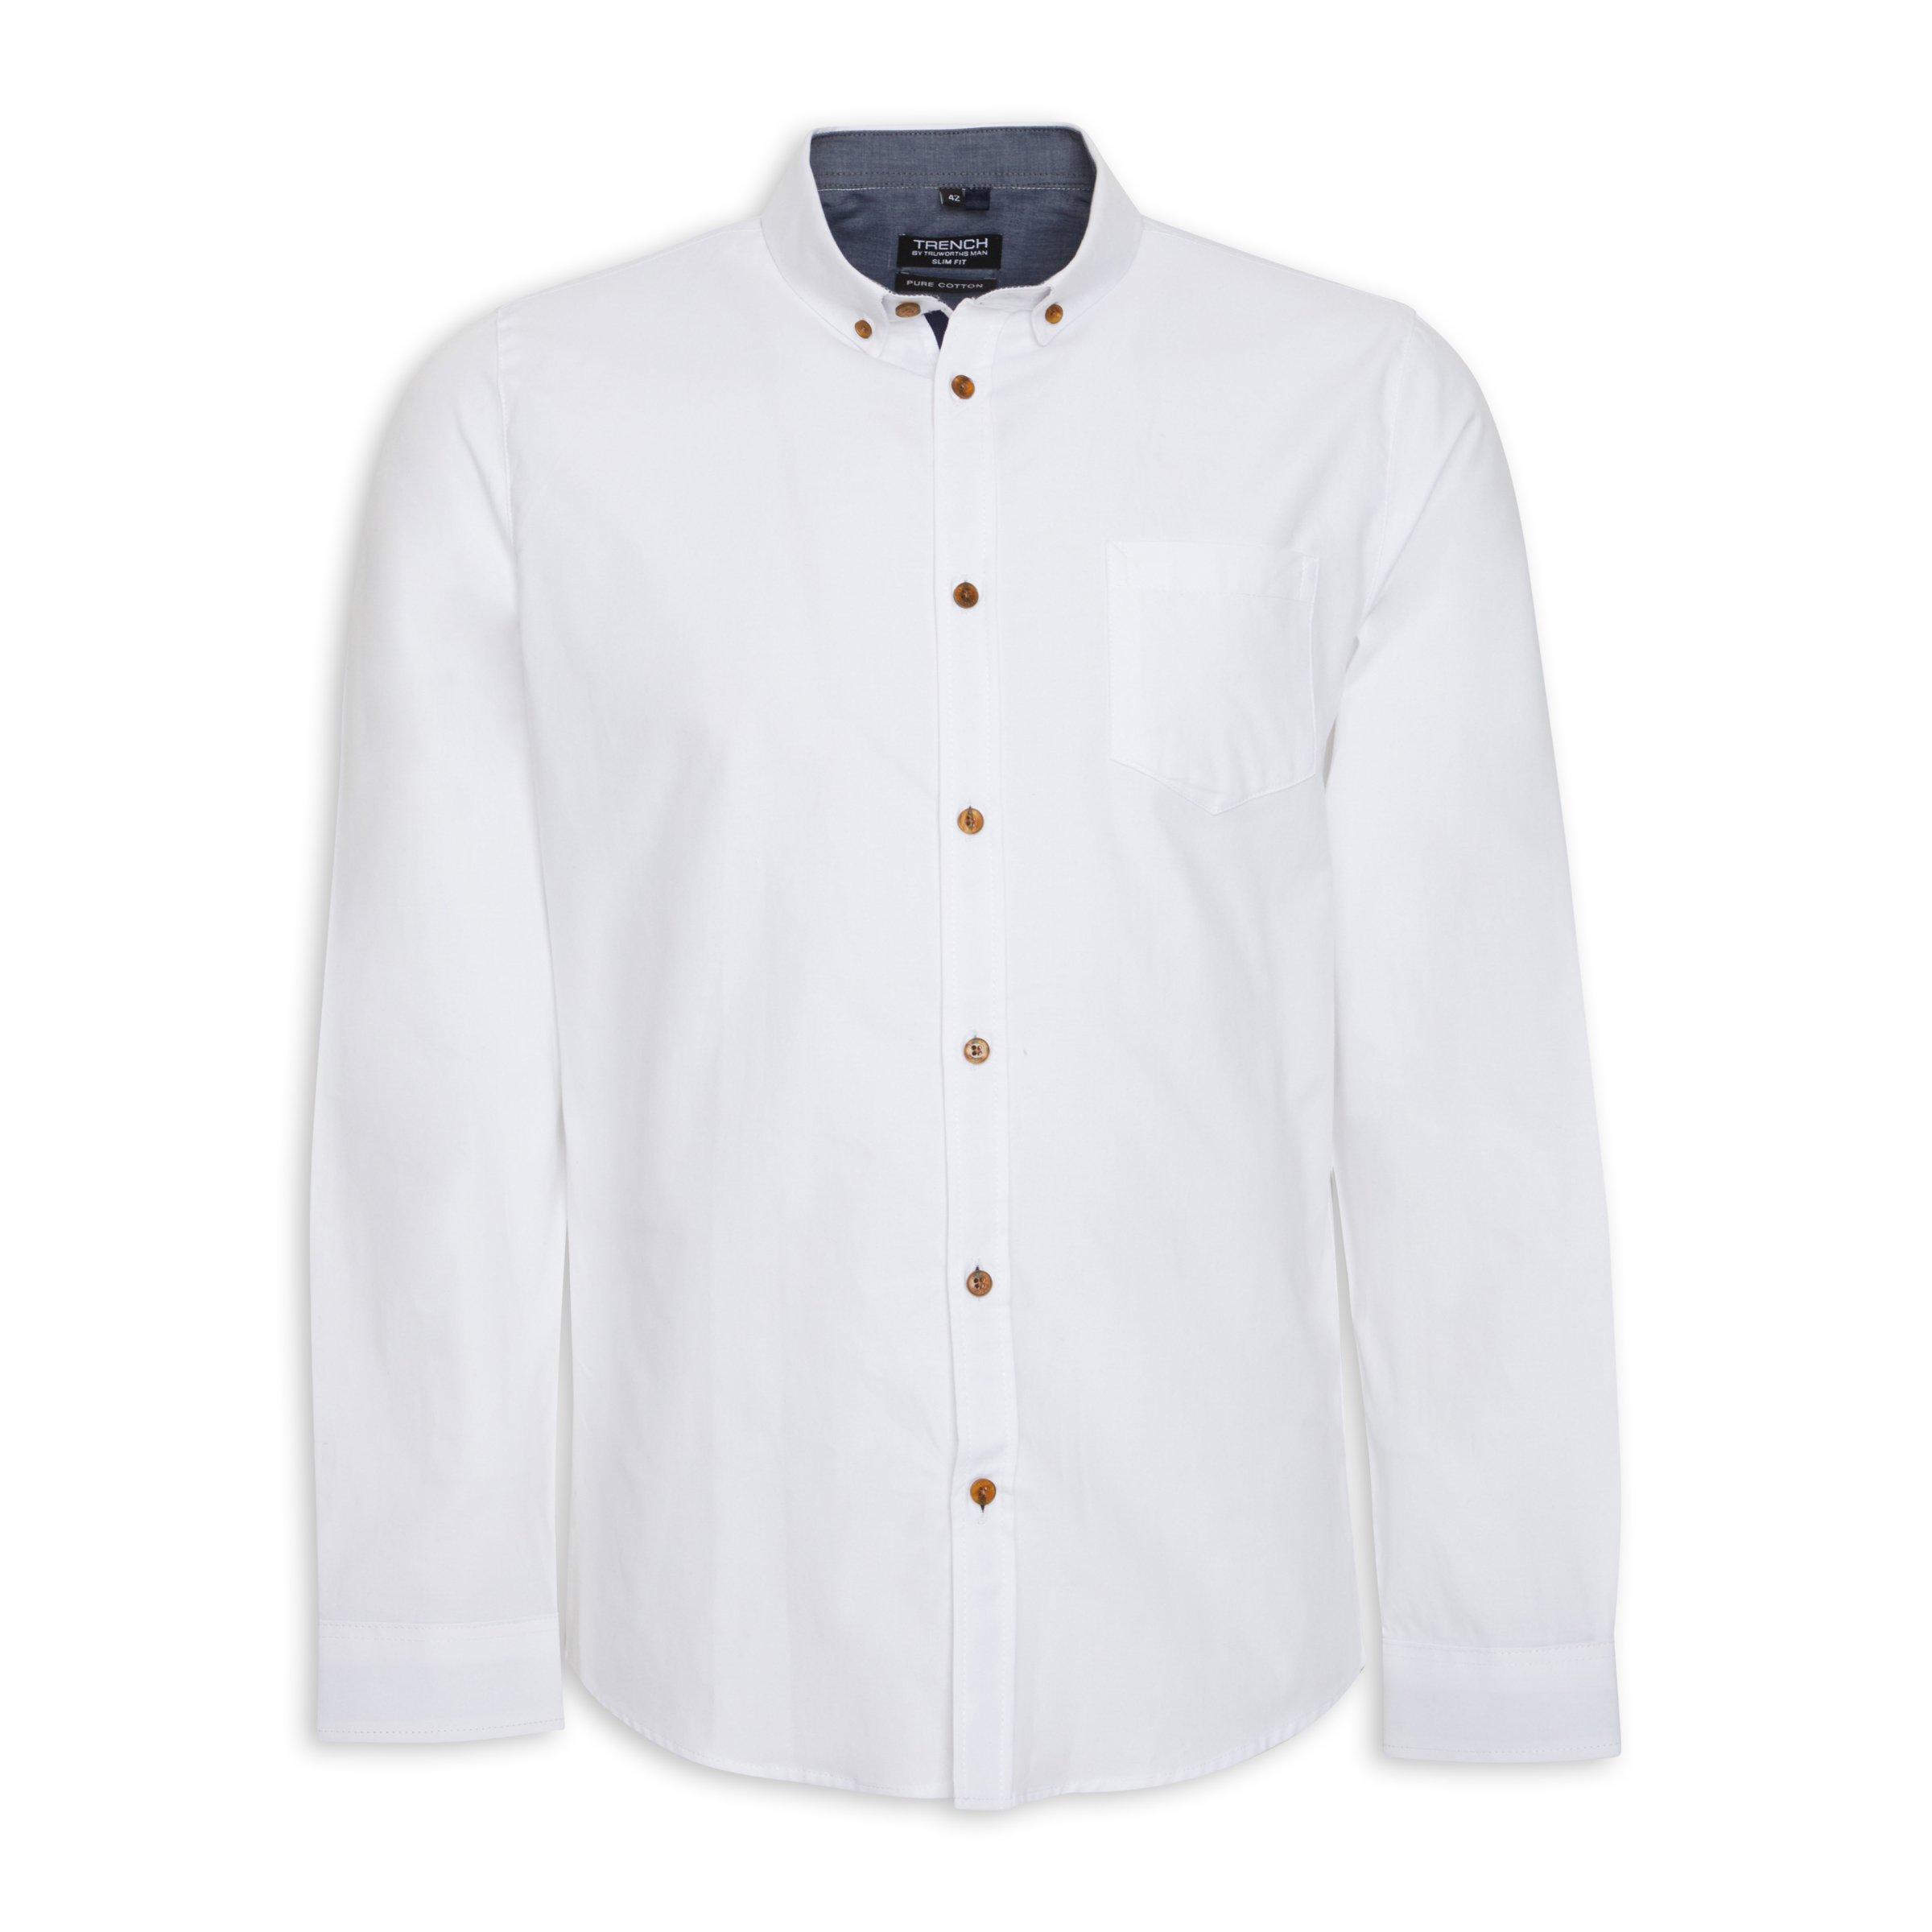 Buy Truworths Man White Oxford Shirt Online | Truworths